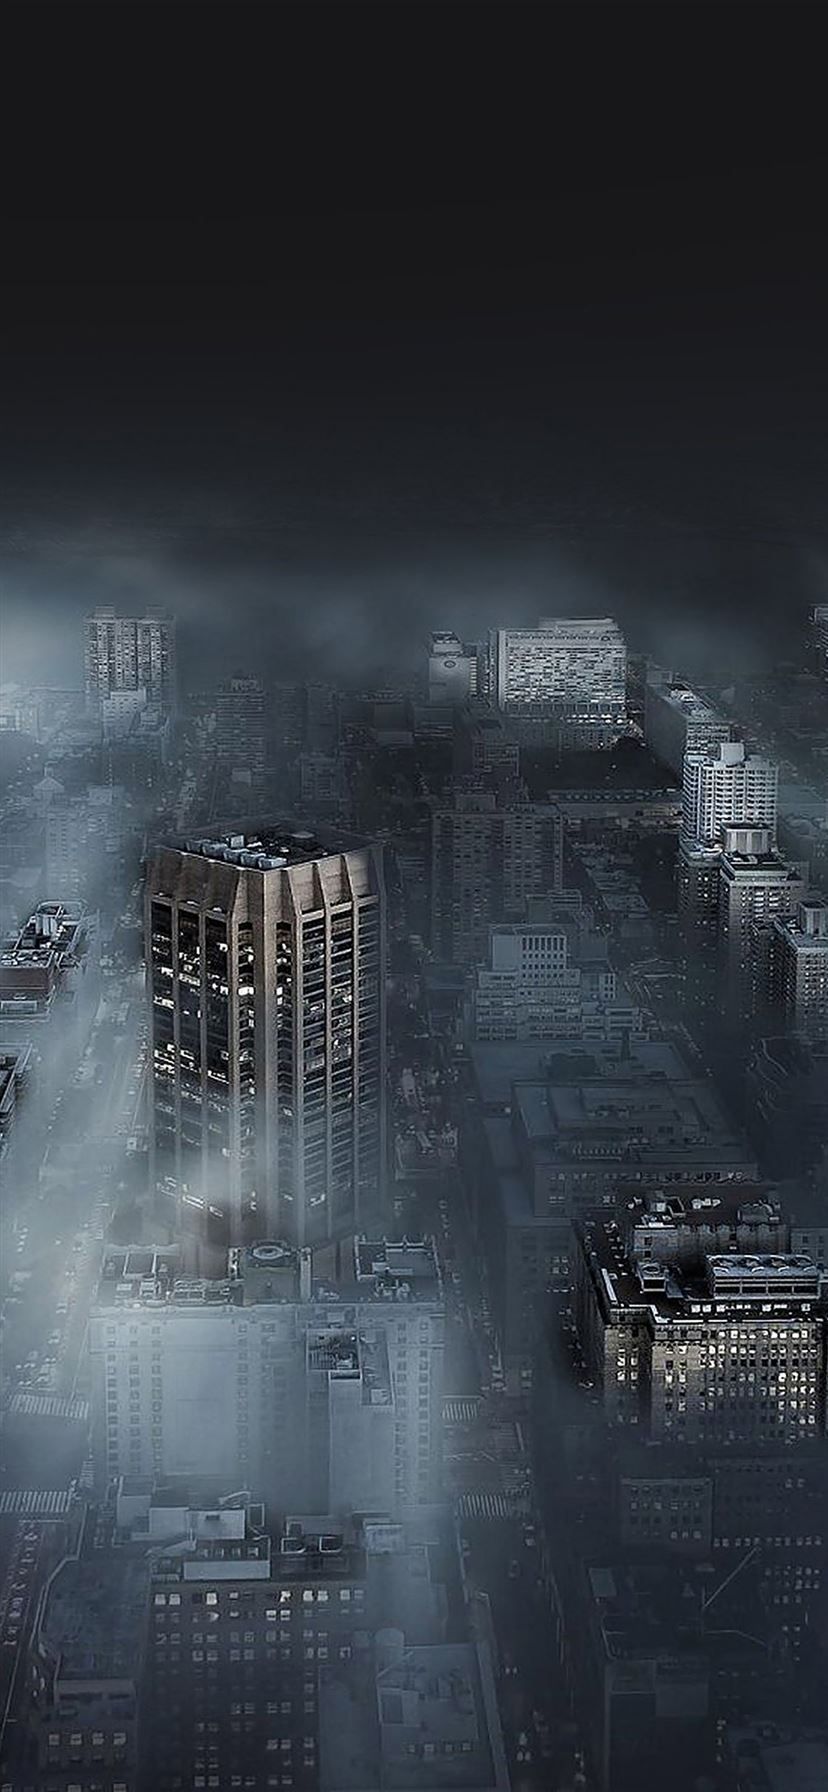 Dark city in fog iPhone 11 Wallpaper Free Download